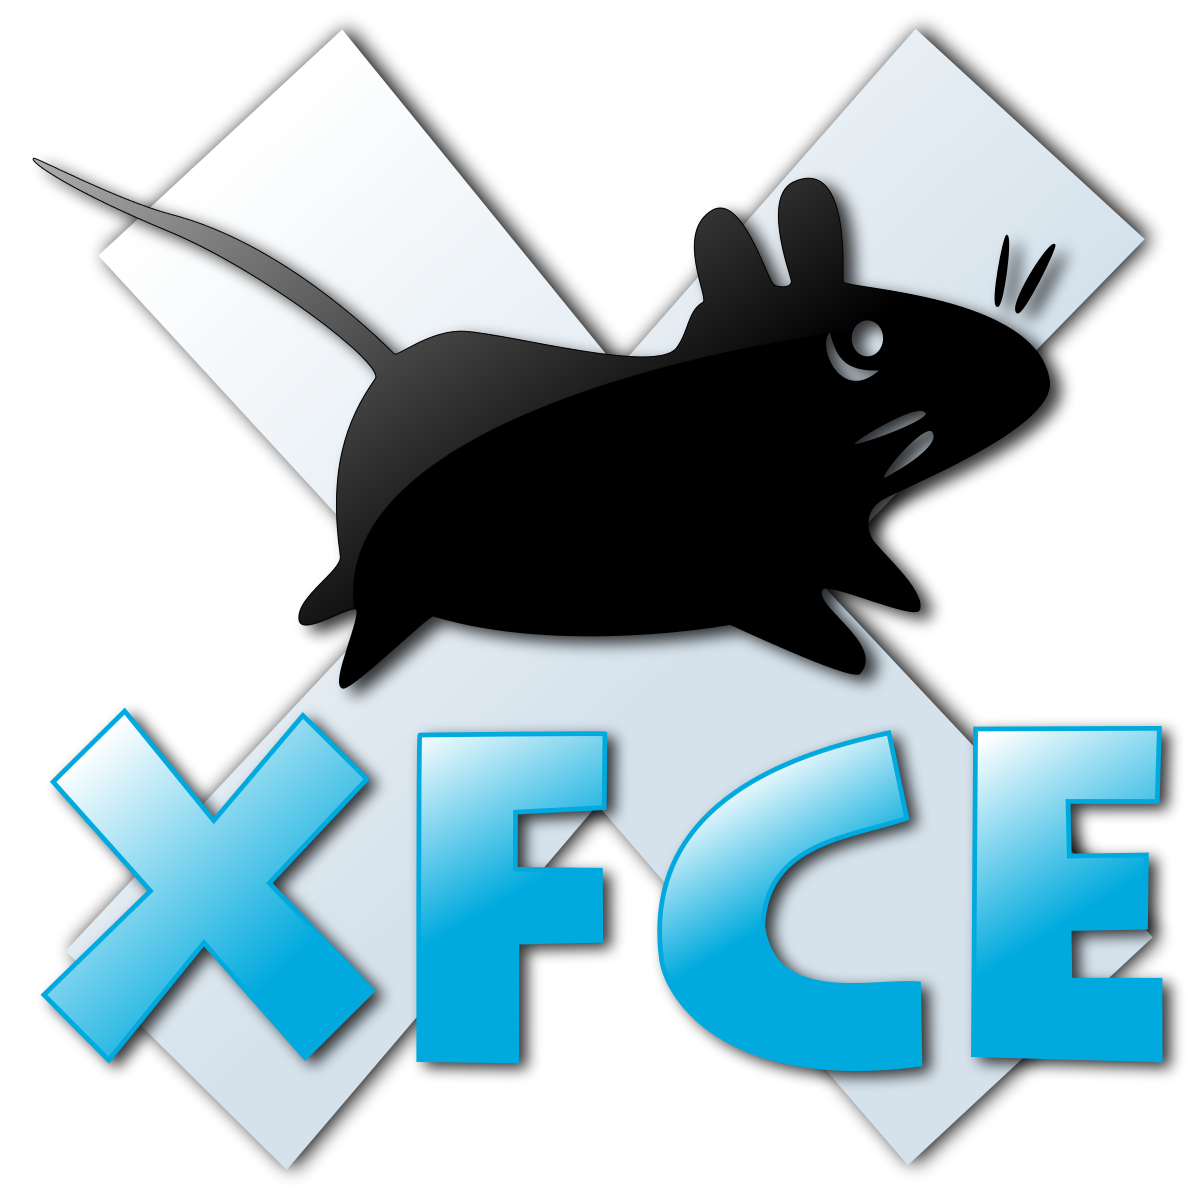 Logo-xfce.png